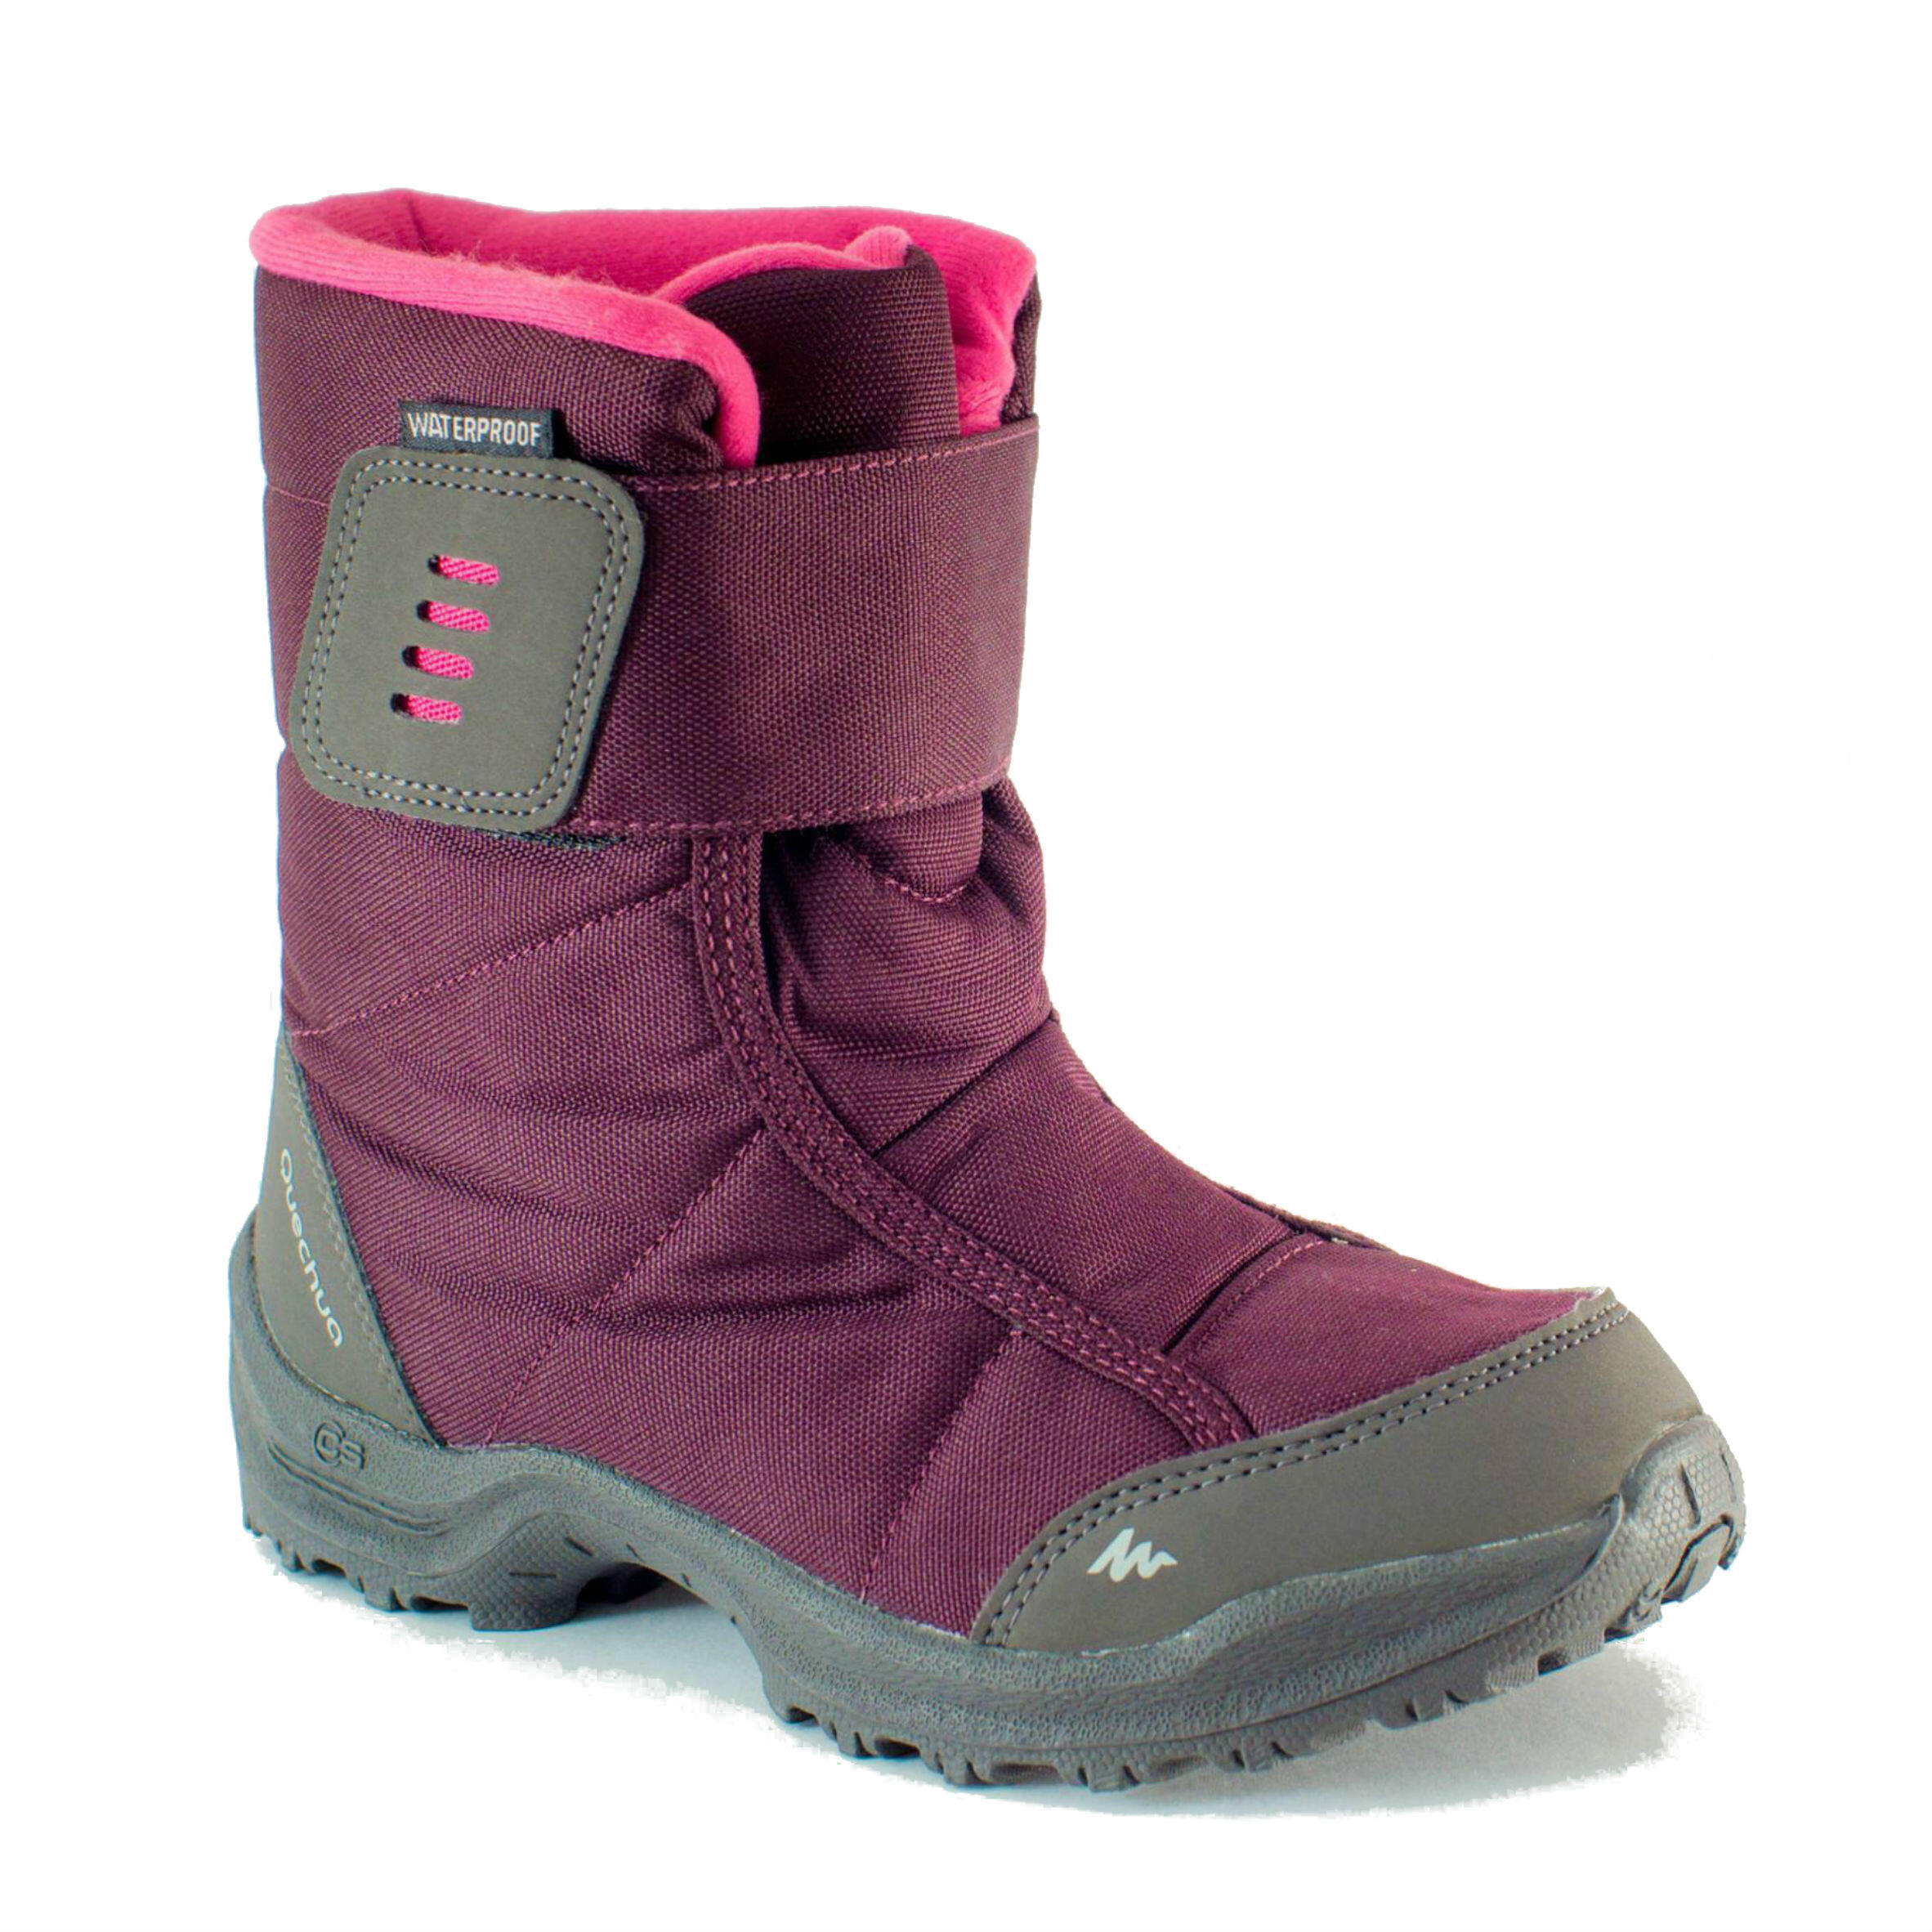 X-Warm Waterproof Snow Boots - Kids 